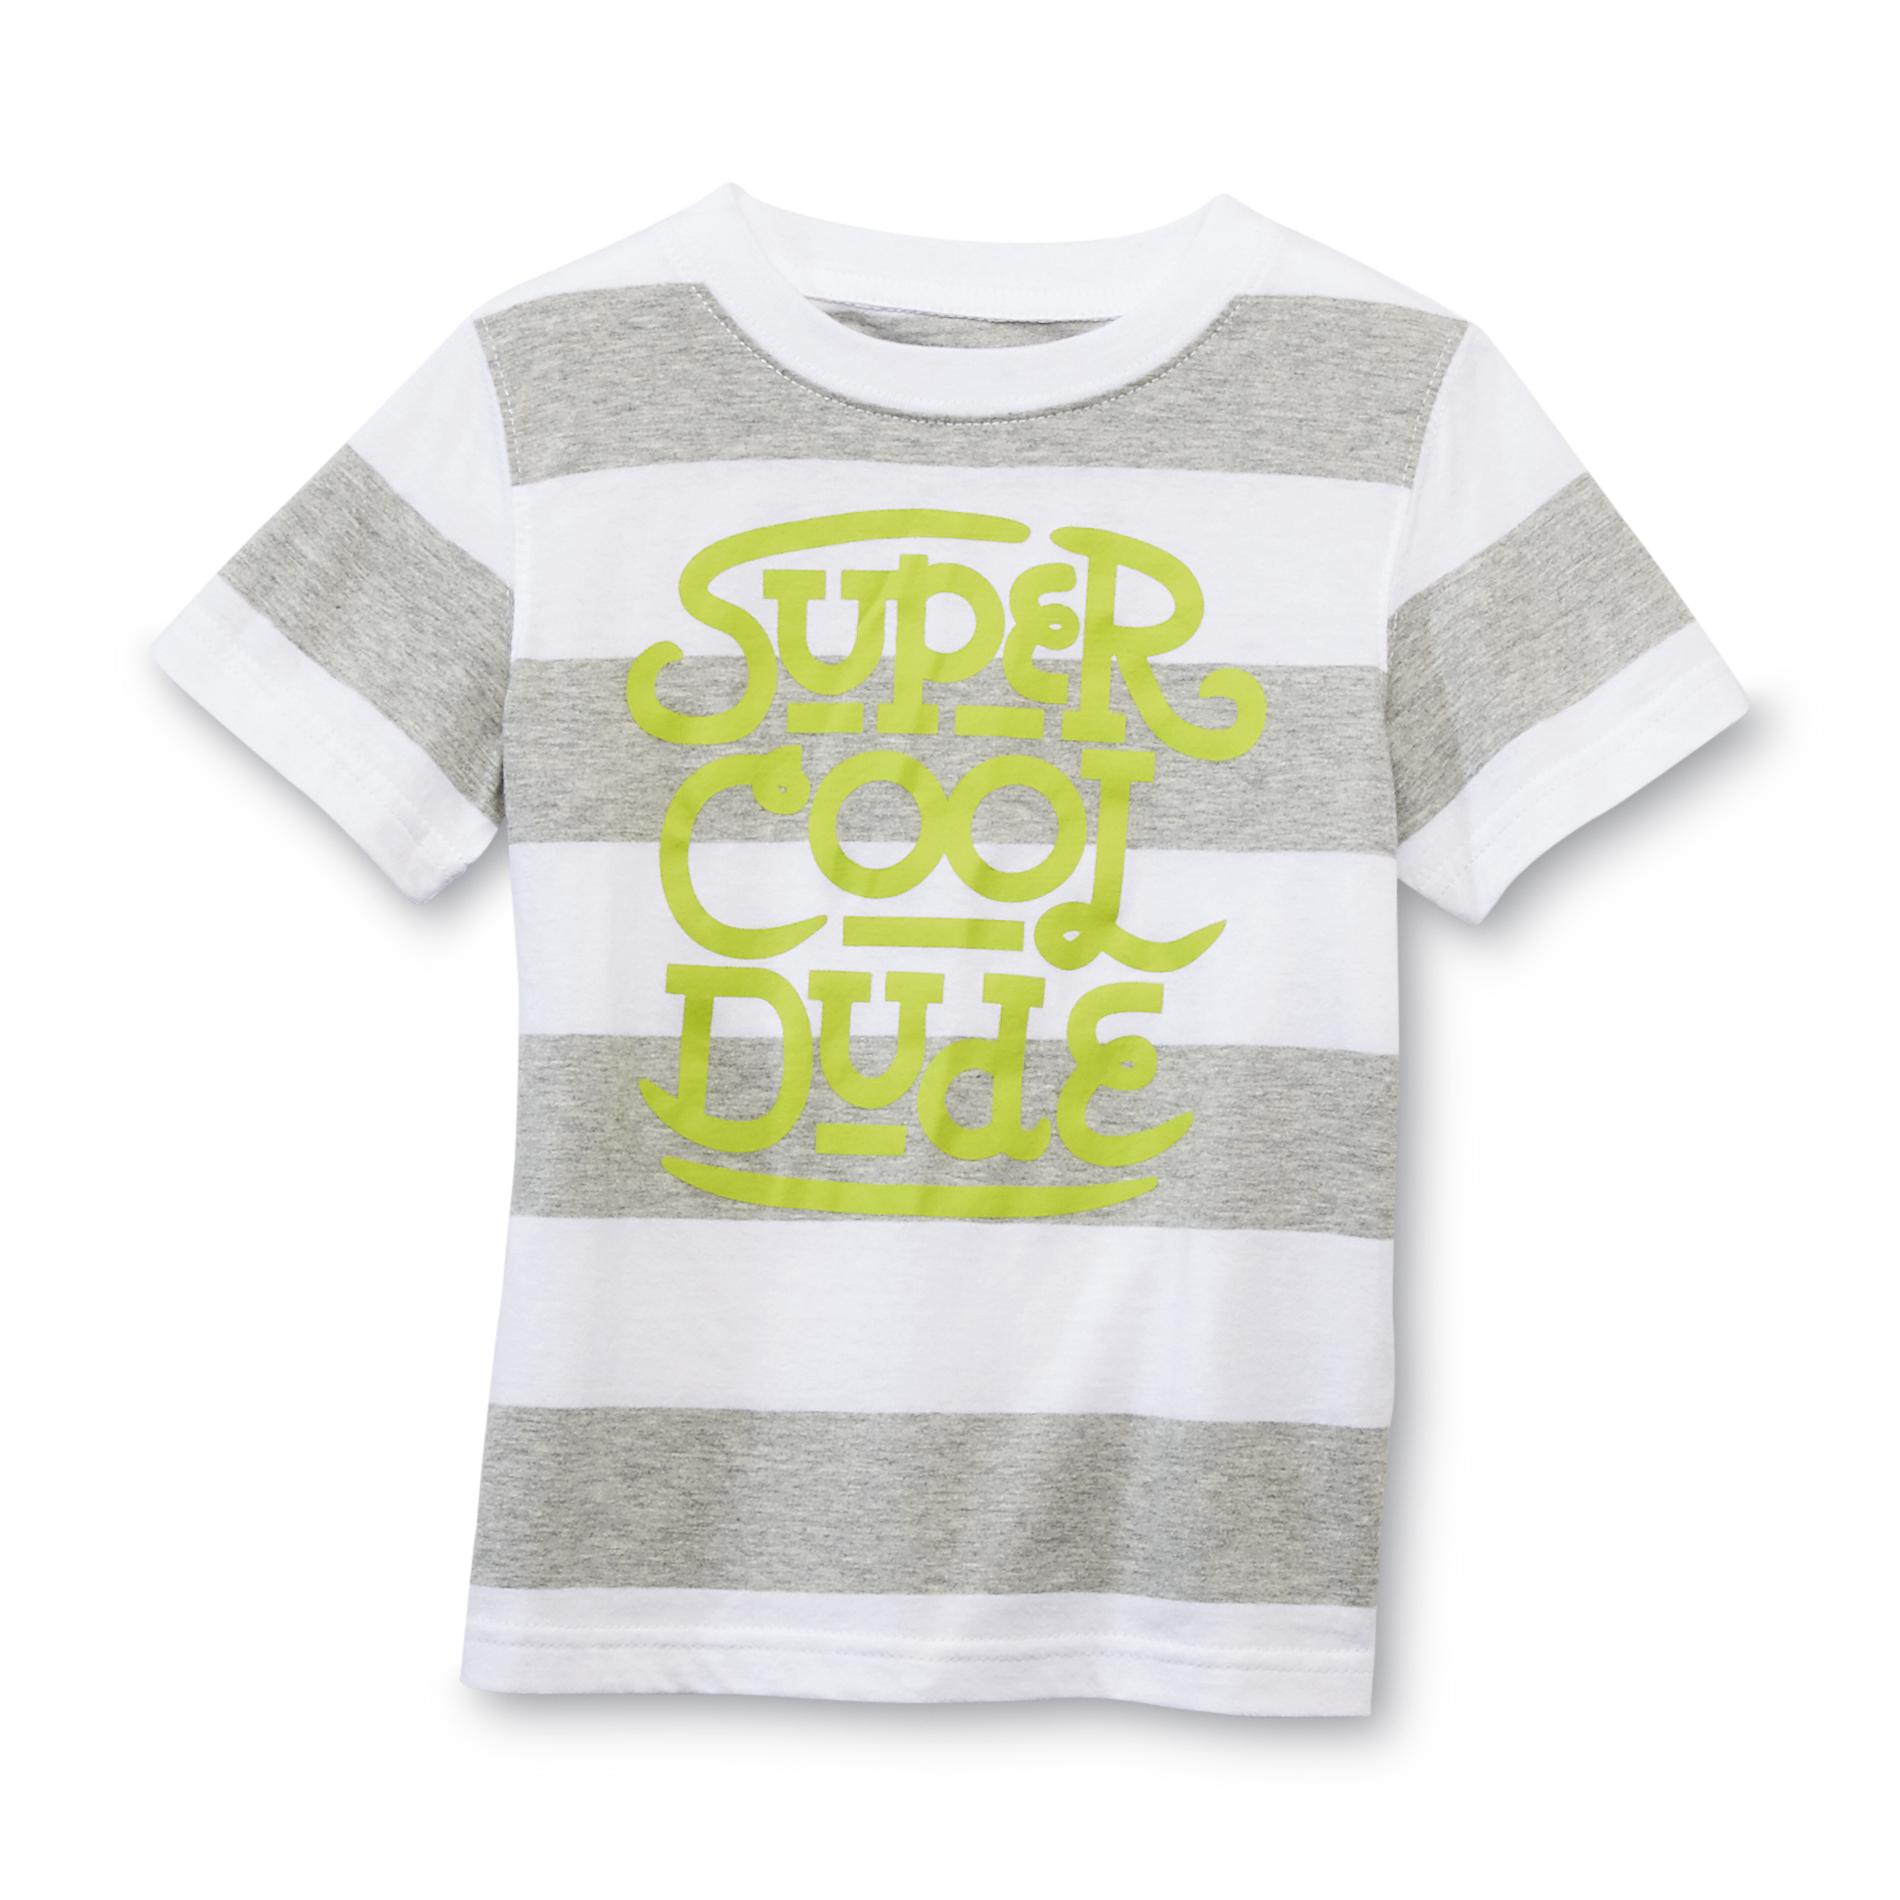 Toughskins Infant & Toddler Boy's Short-Sleeve Graphic T-Shirt - Striped